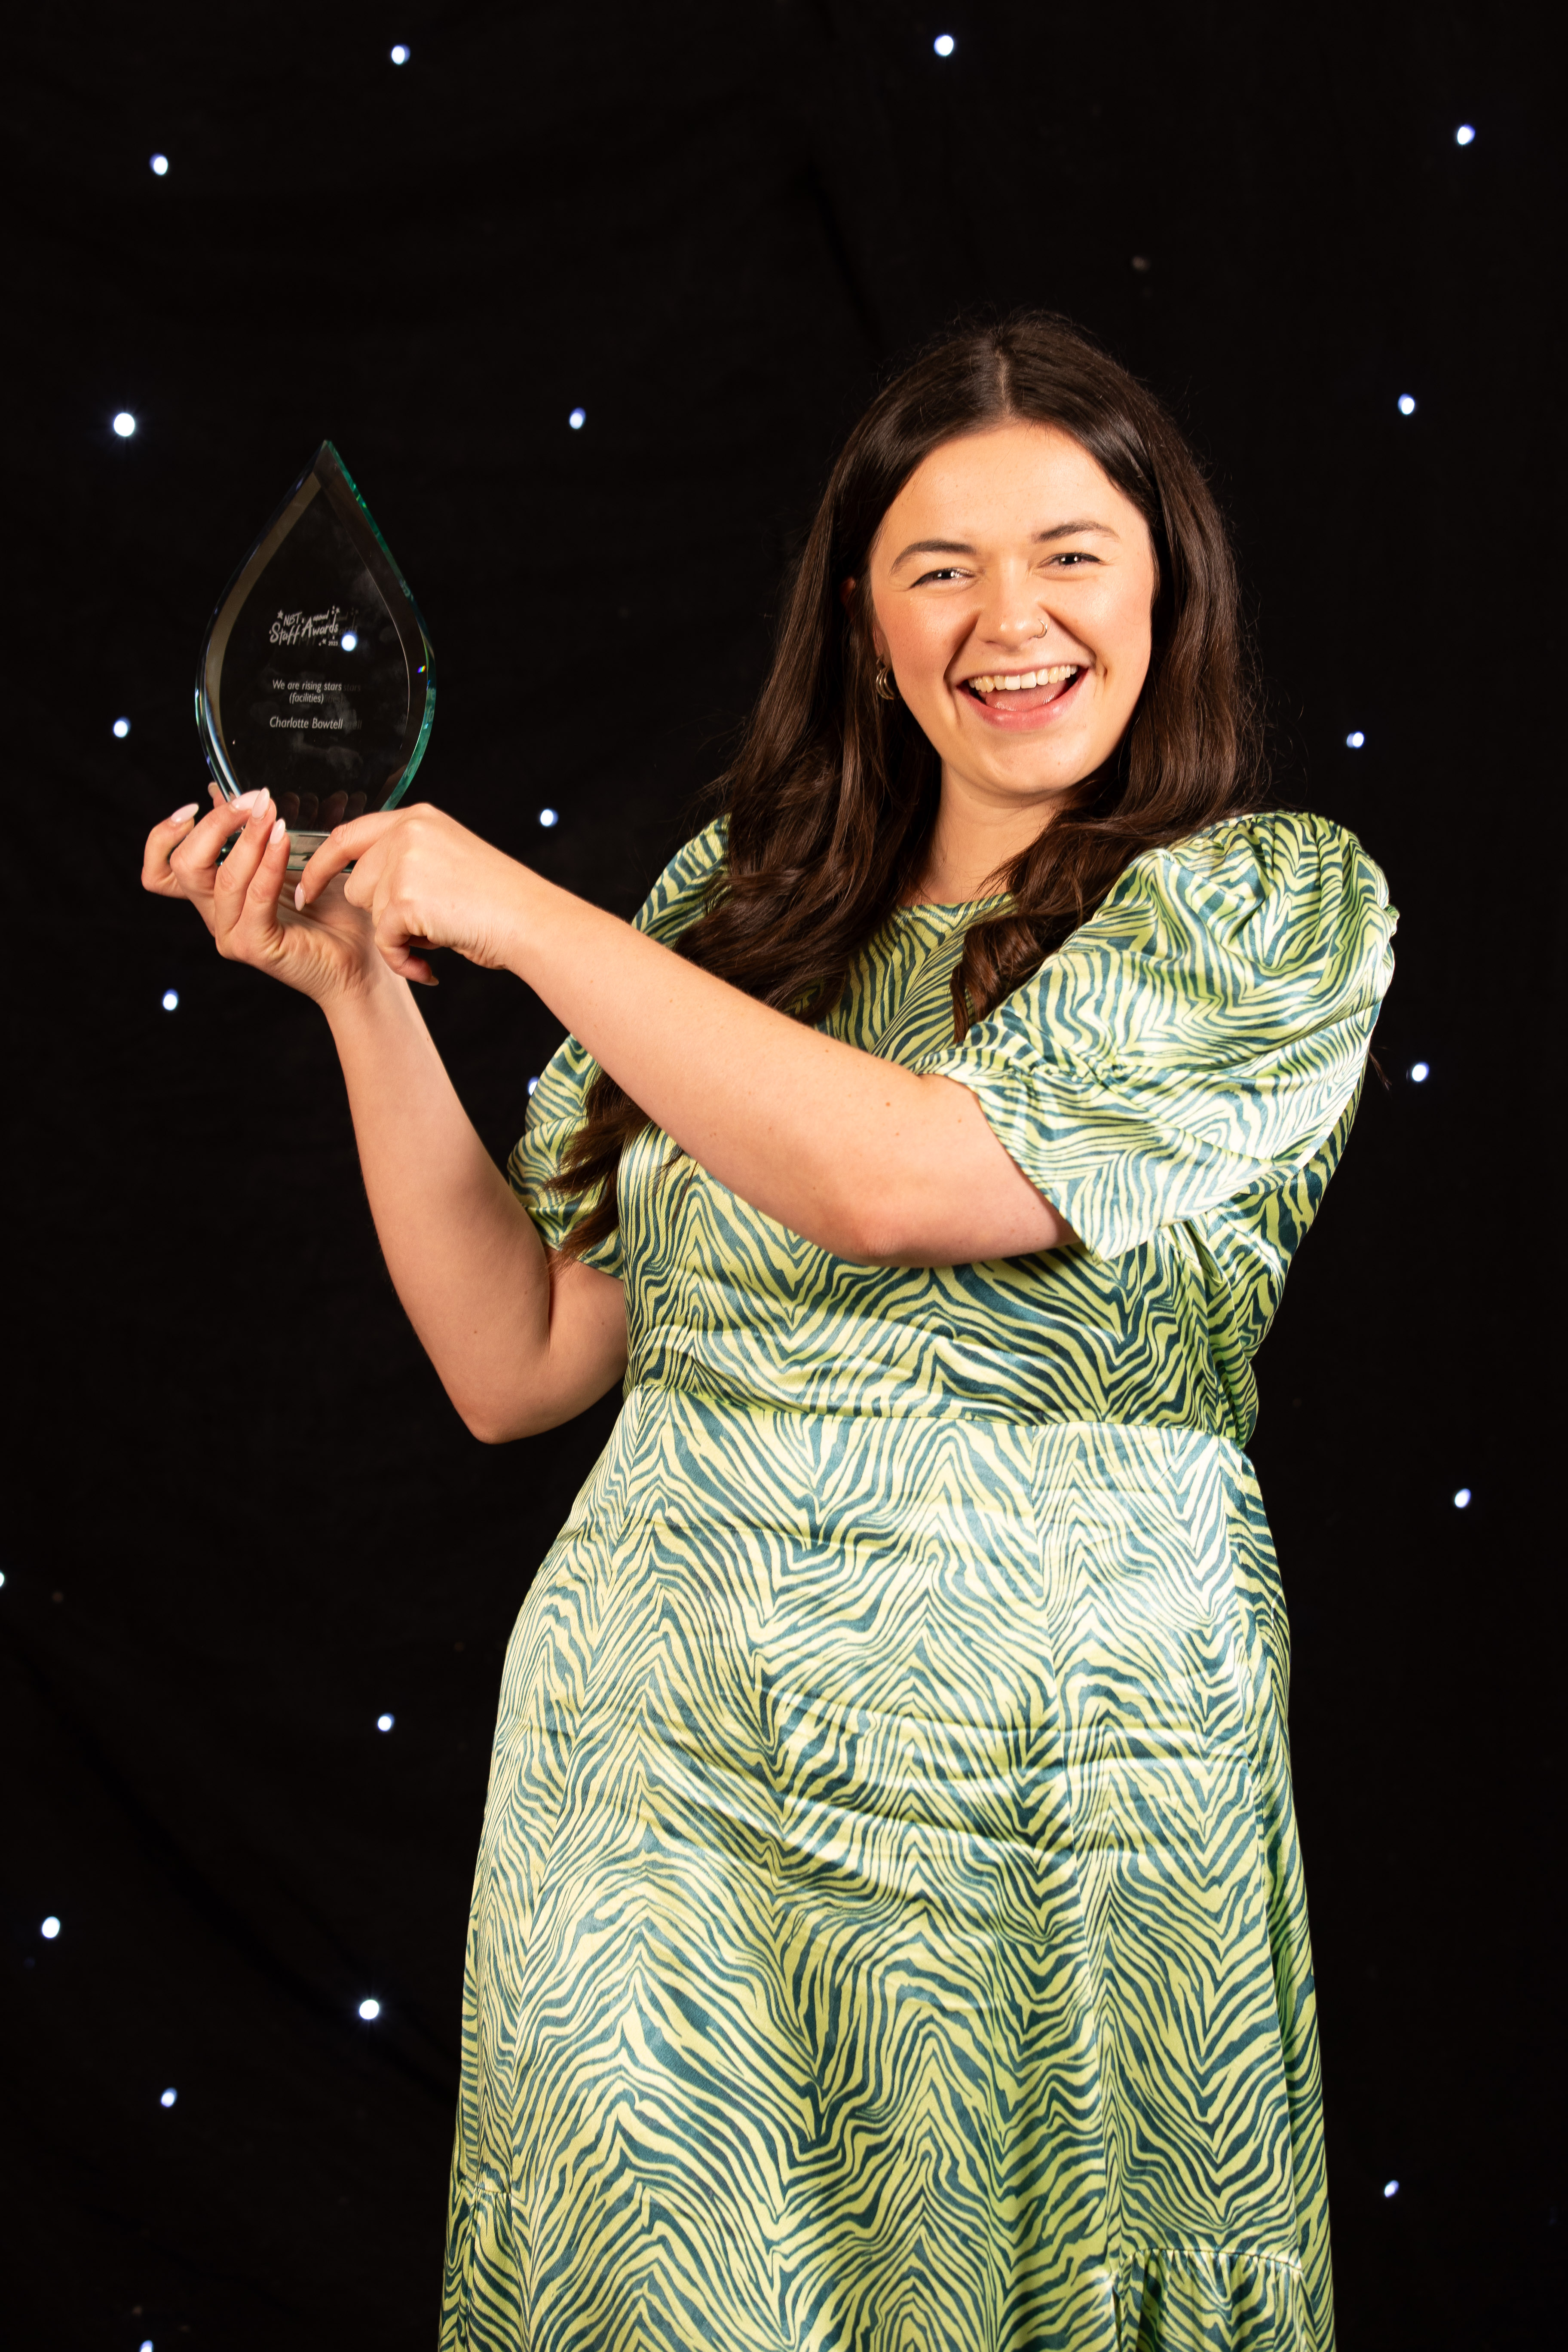 Charlotte Bowtell, winner of the We are rising stars (facilities) award